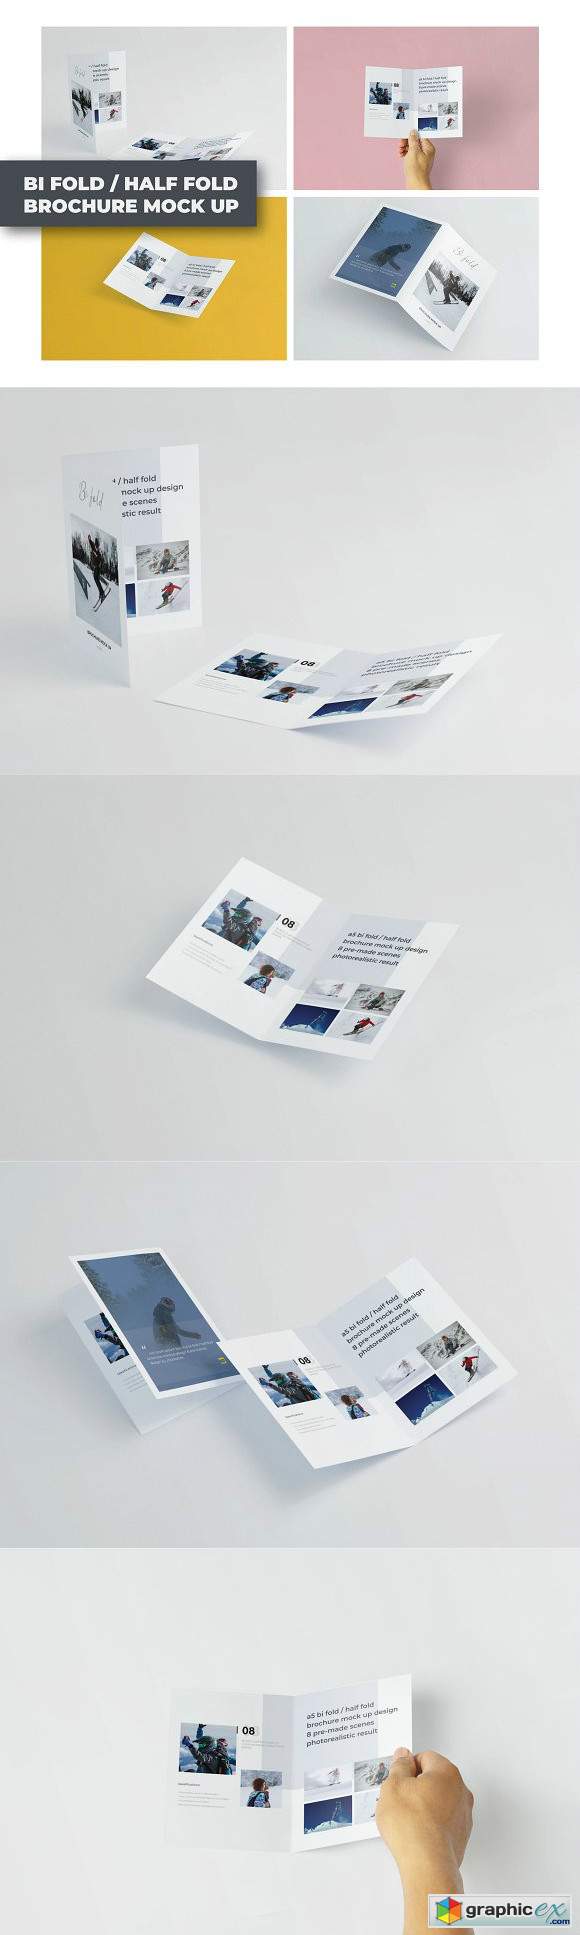 A5 Bifold Half-Fold Brochure Mockup